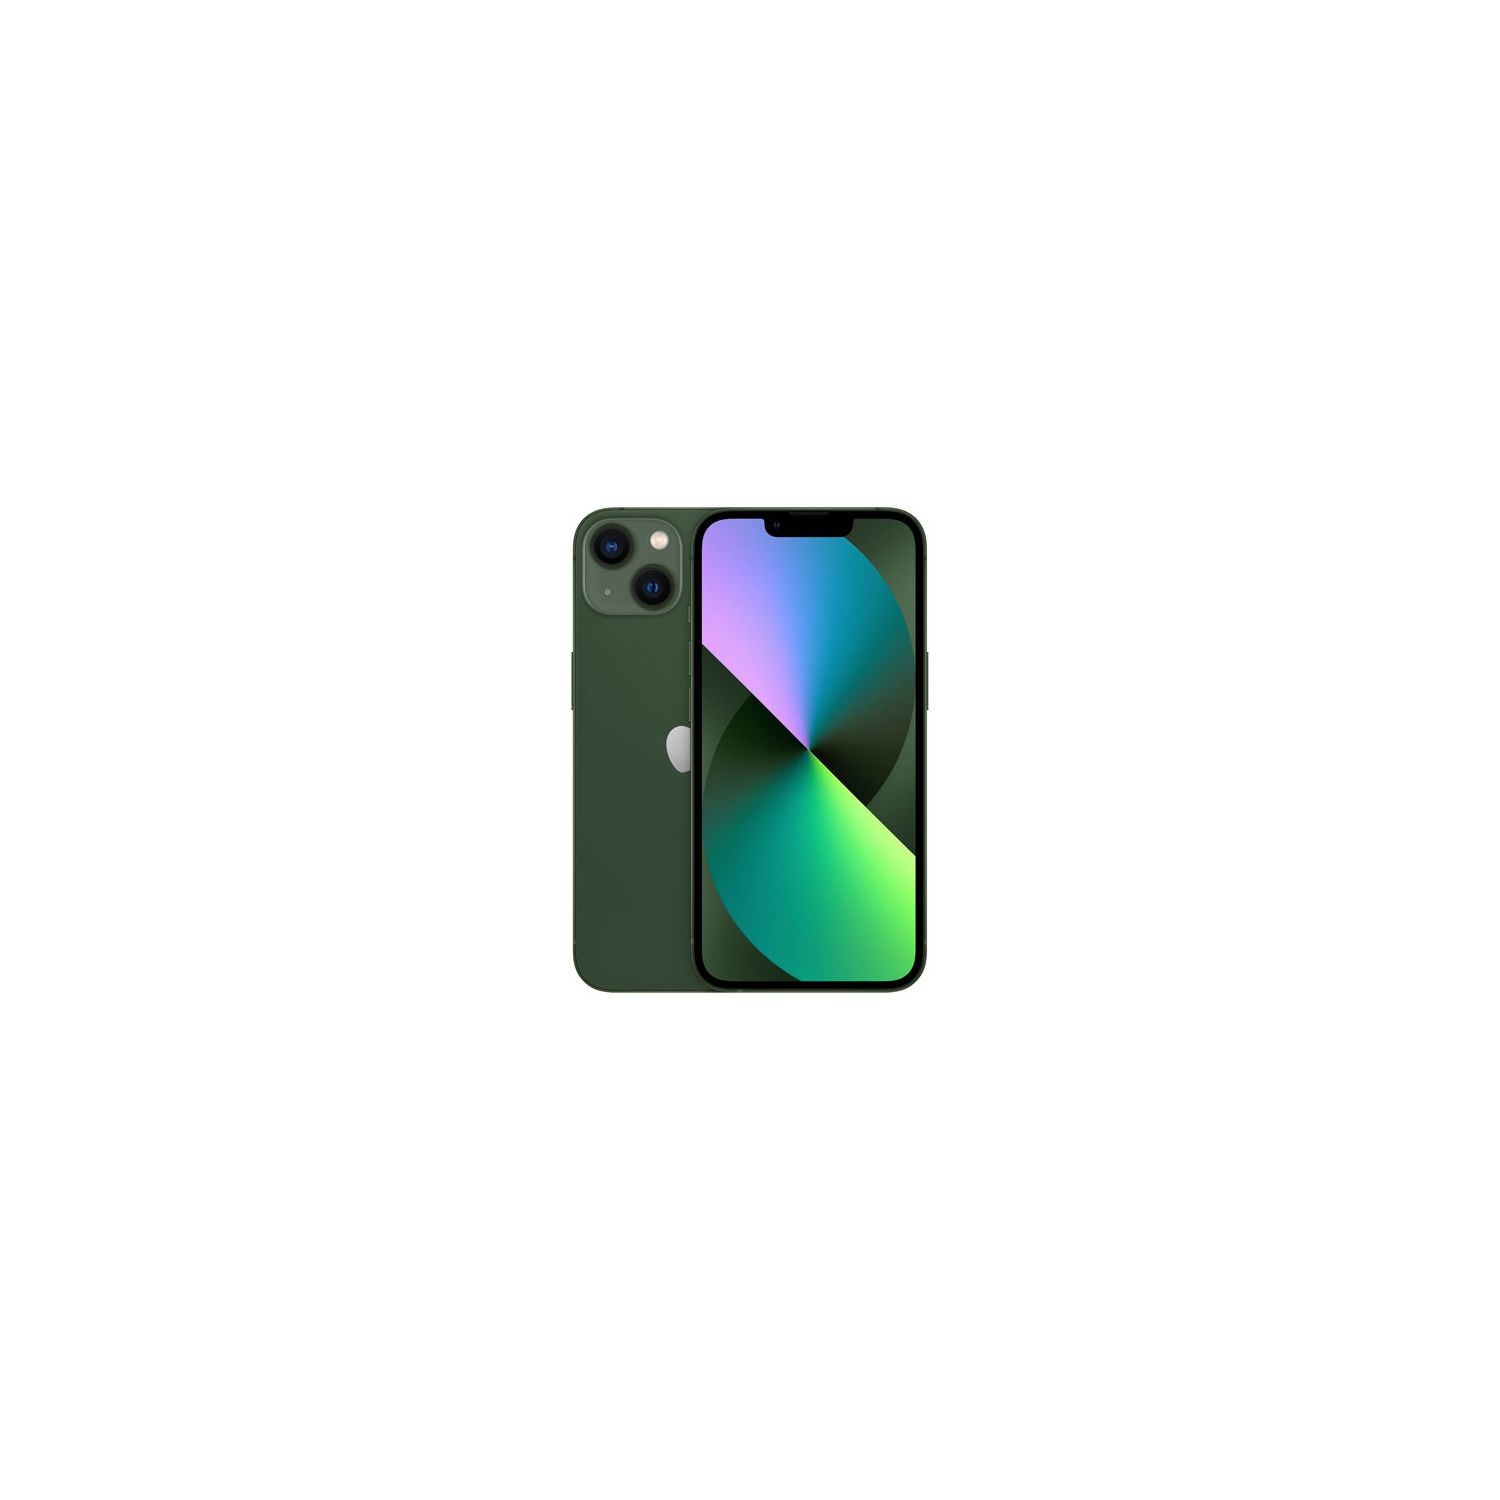 Apple iPhone 13 mini 256GB - Green - Unlocked - Open Box